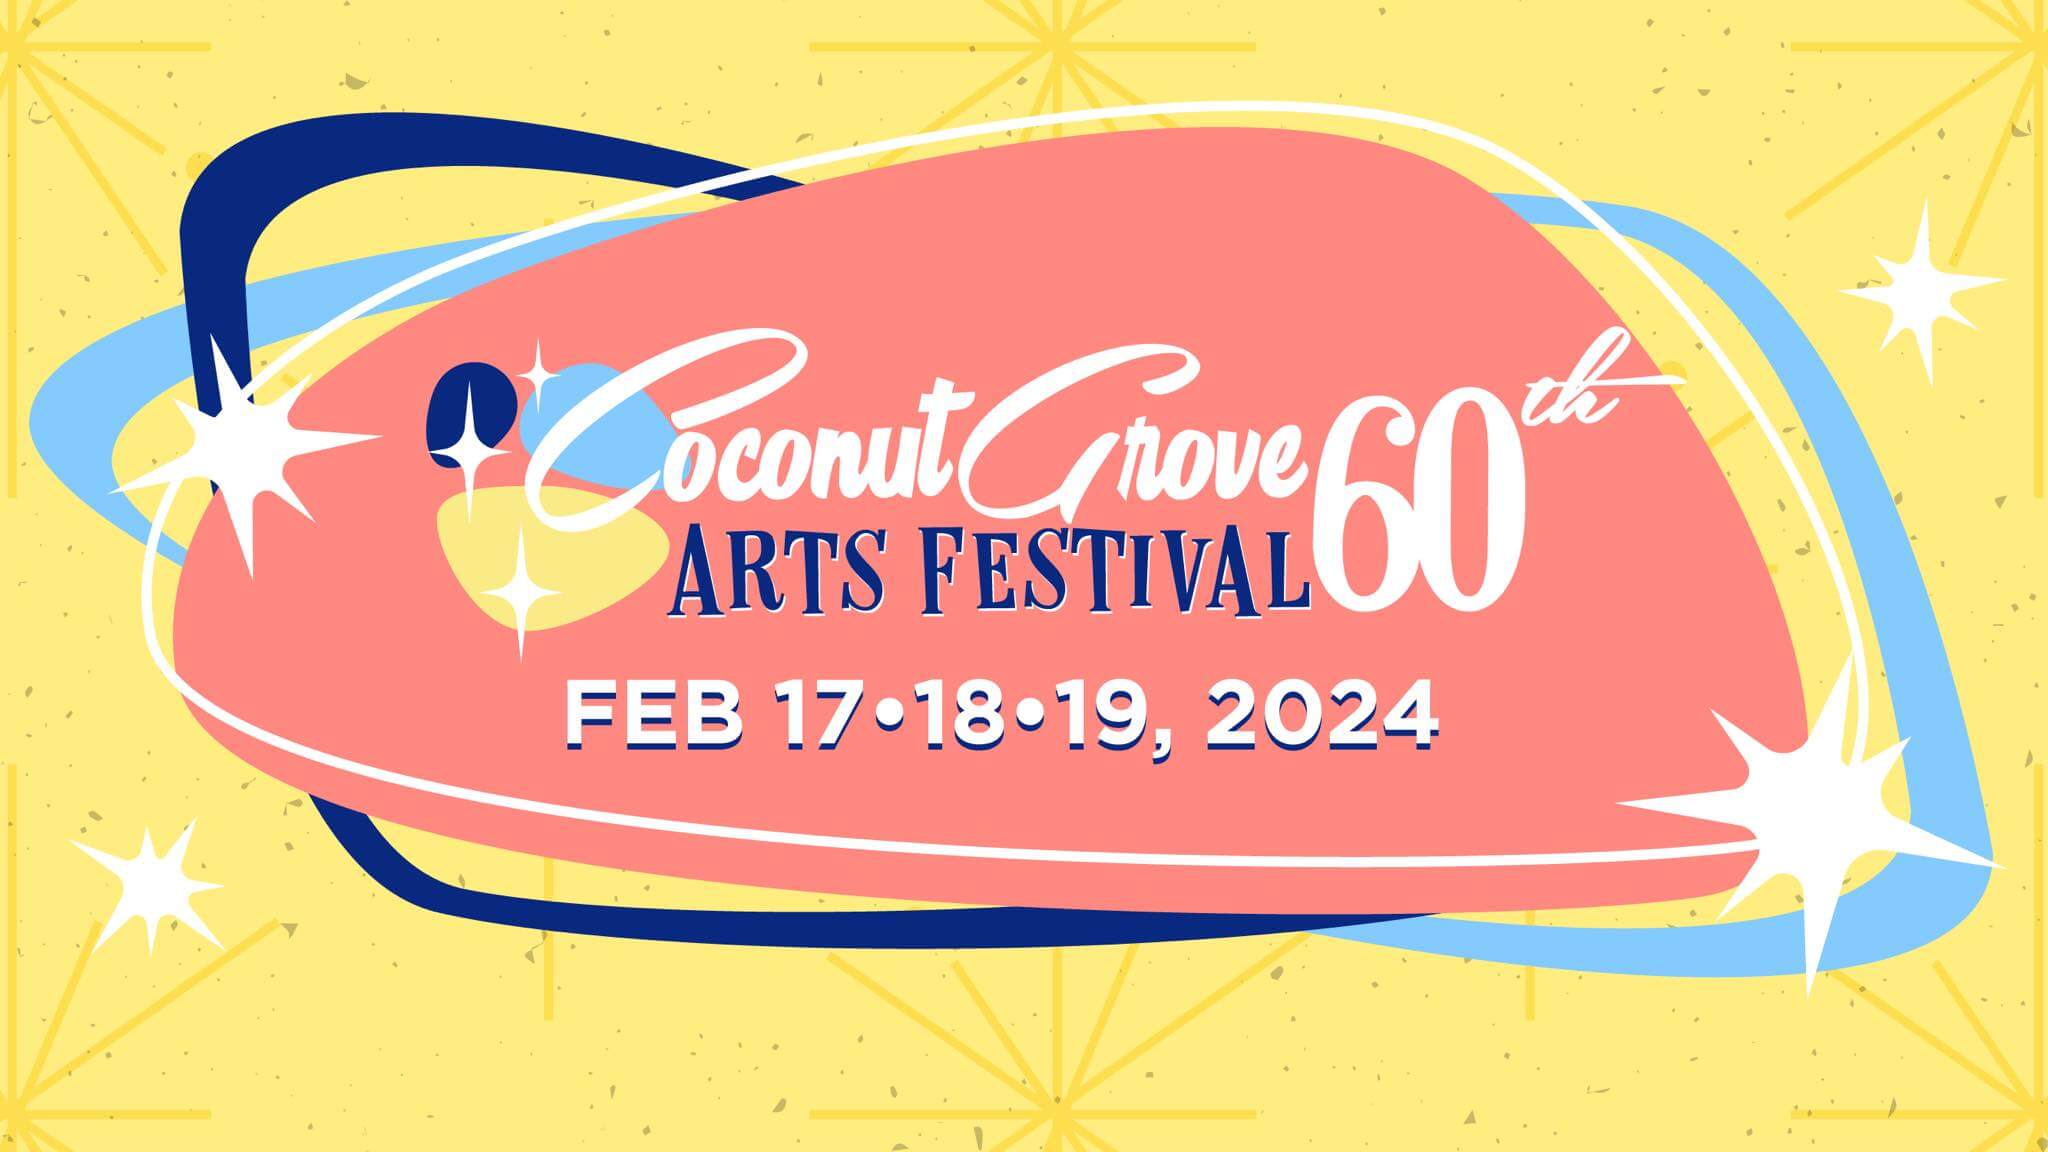 Cconut Grove Art Festival Promotional Flyer